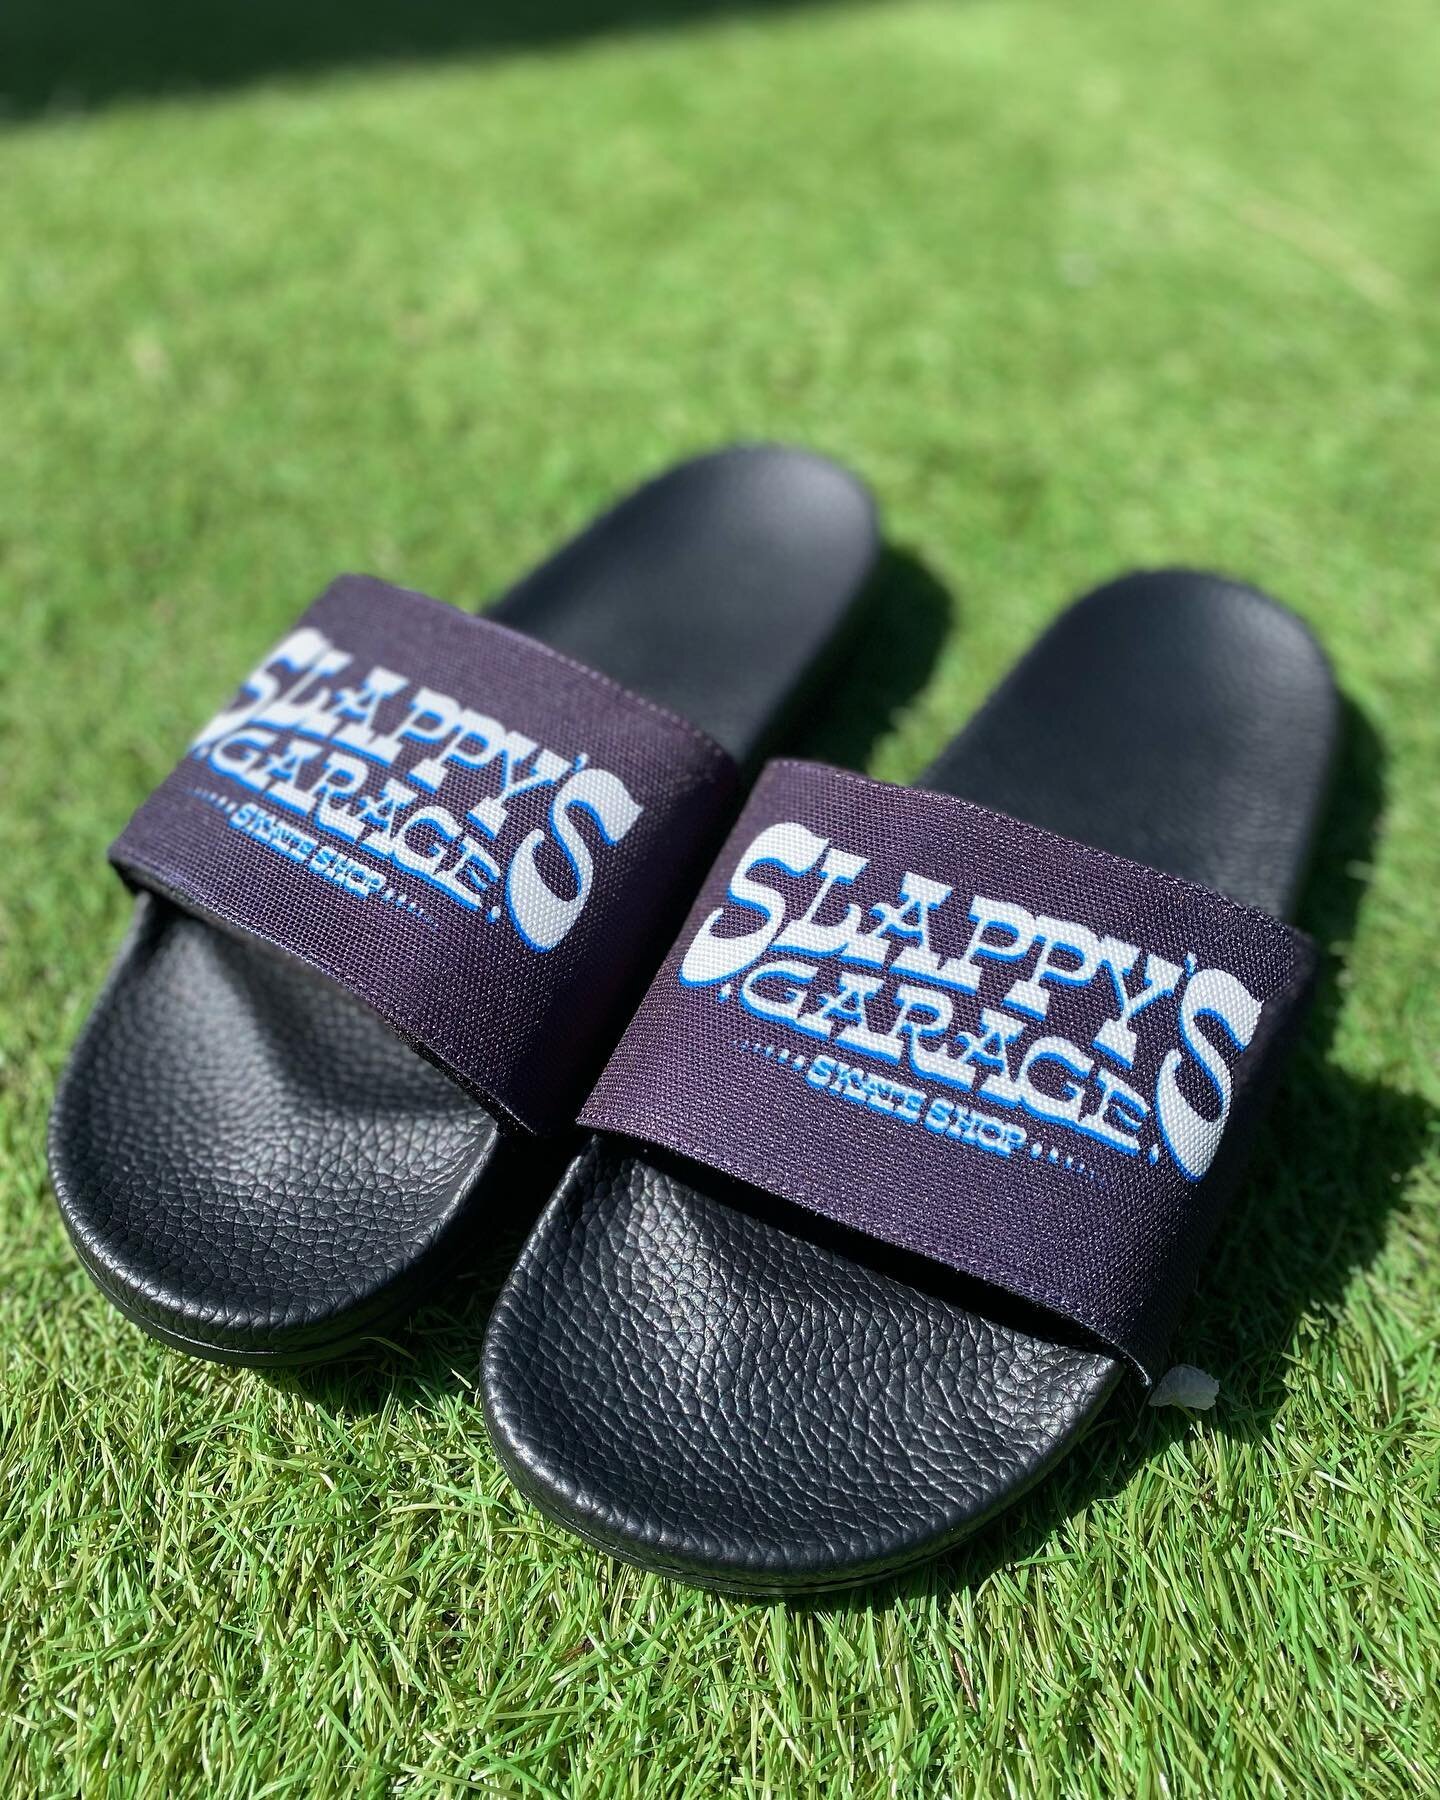 Custom slide sandals for @slappysgarage 🩴

#SanDiego
#SlappysGarage